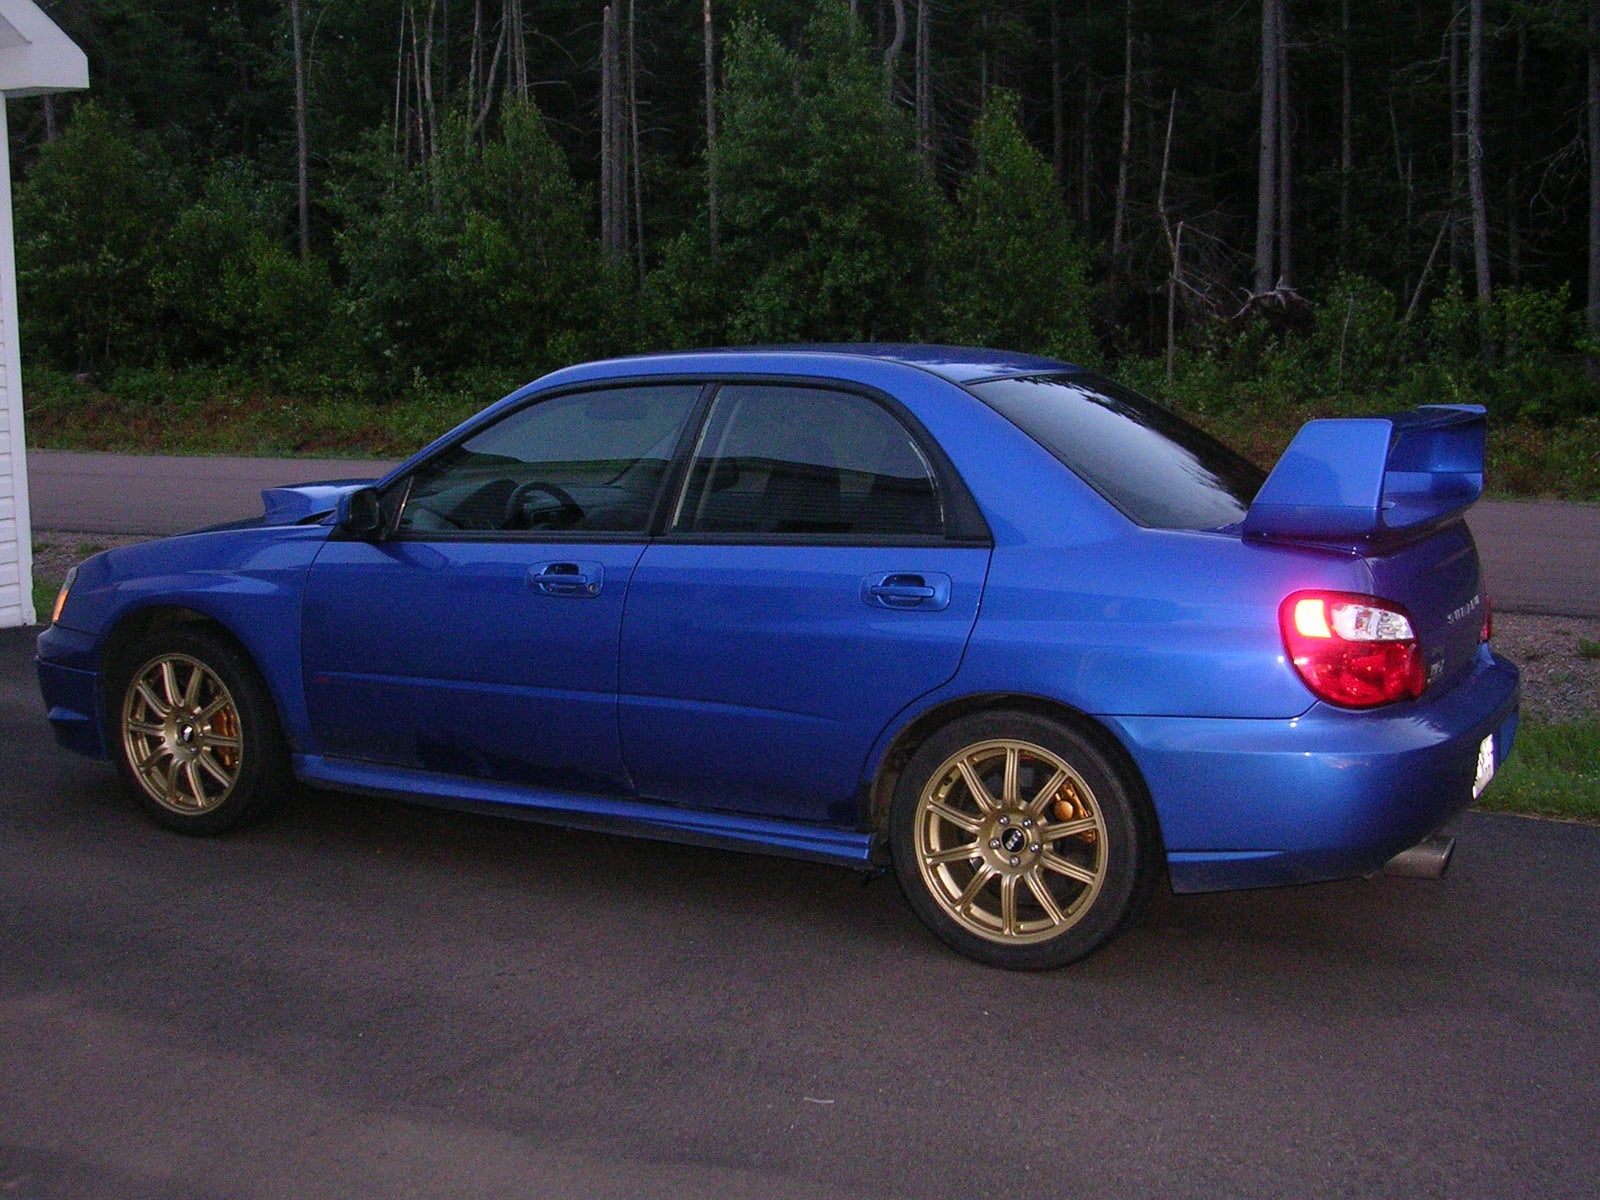 2004 Subaru Impreza WRX STi Pictures CarGurus